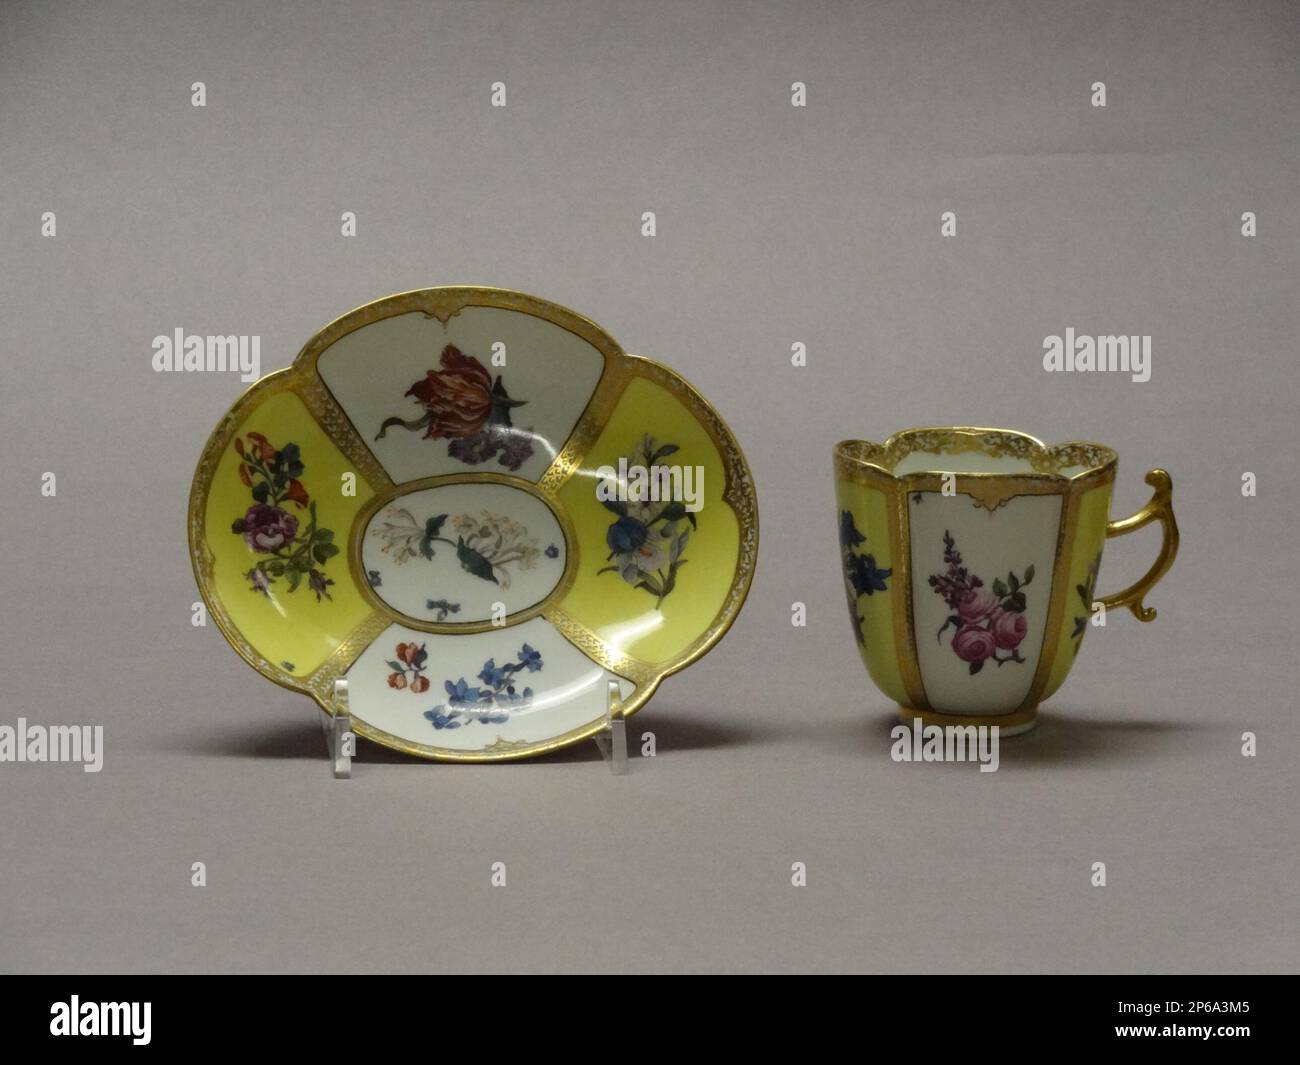 Meissen Porcelain Manufactory, Cup and Saucer, c. 1745, hard-paste porcelain. Stock Photo